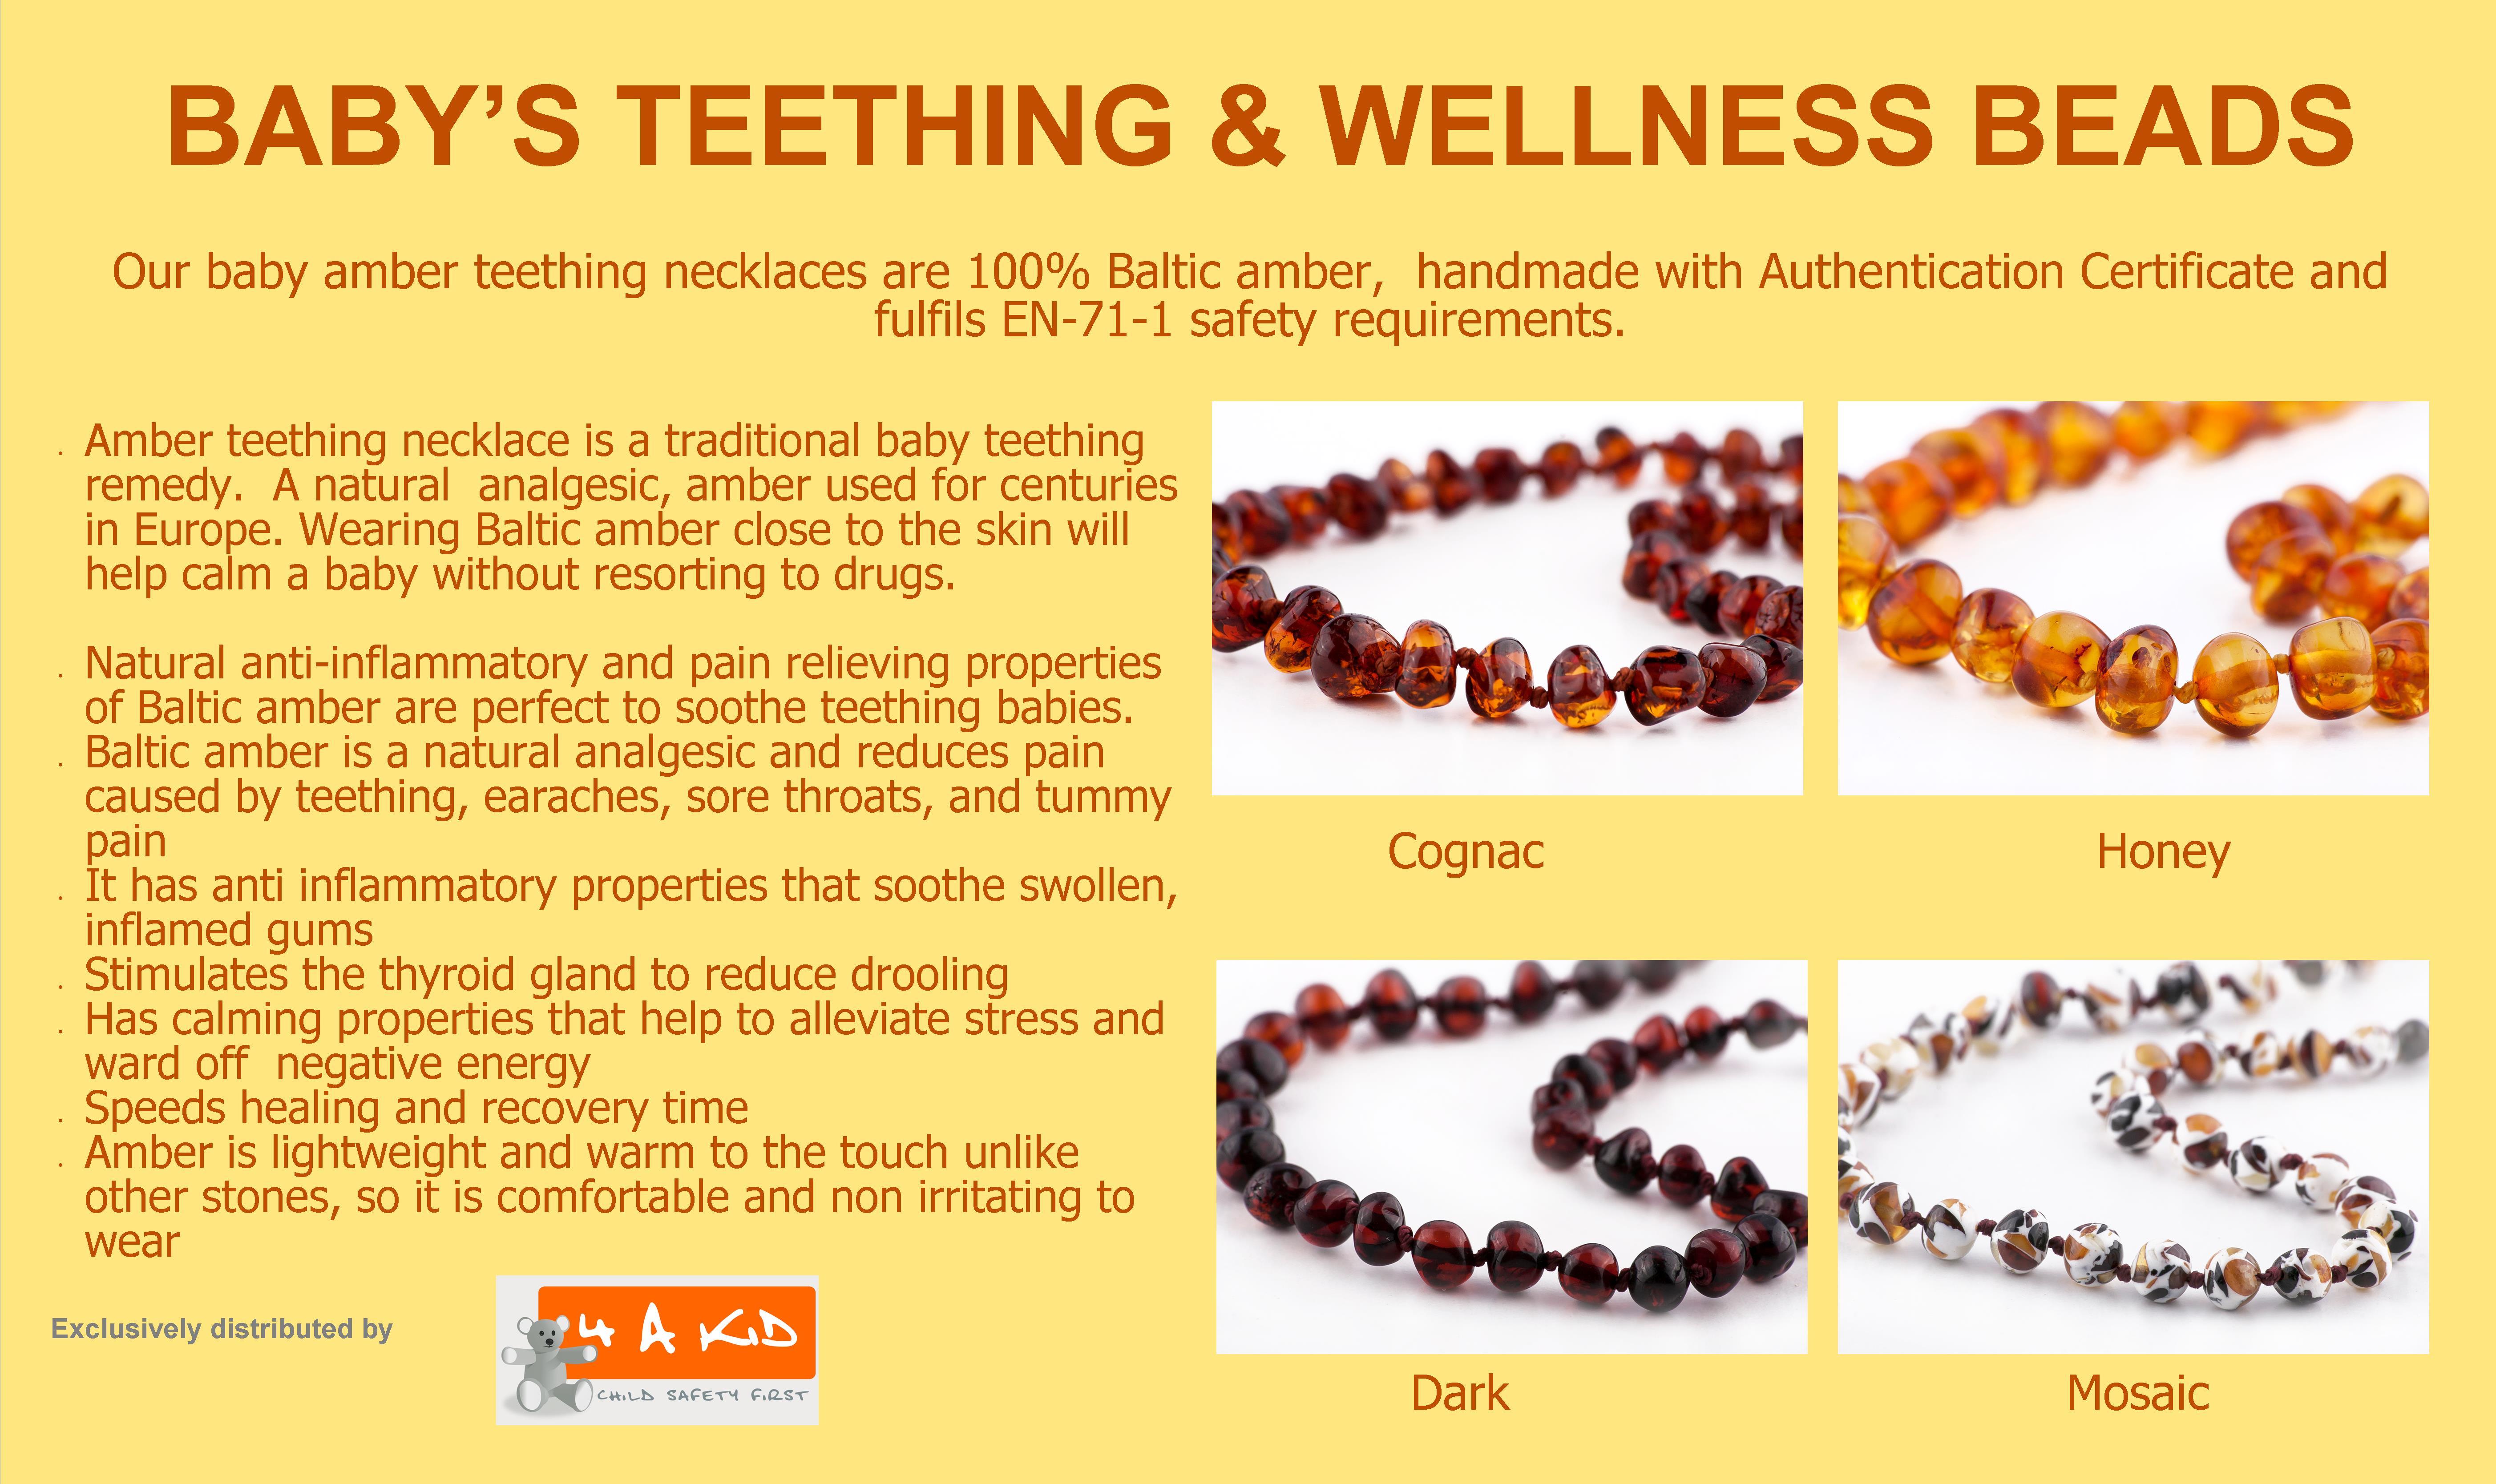 baltic amber teething necklace benefits